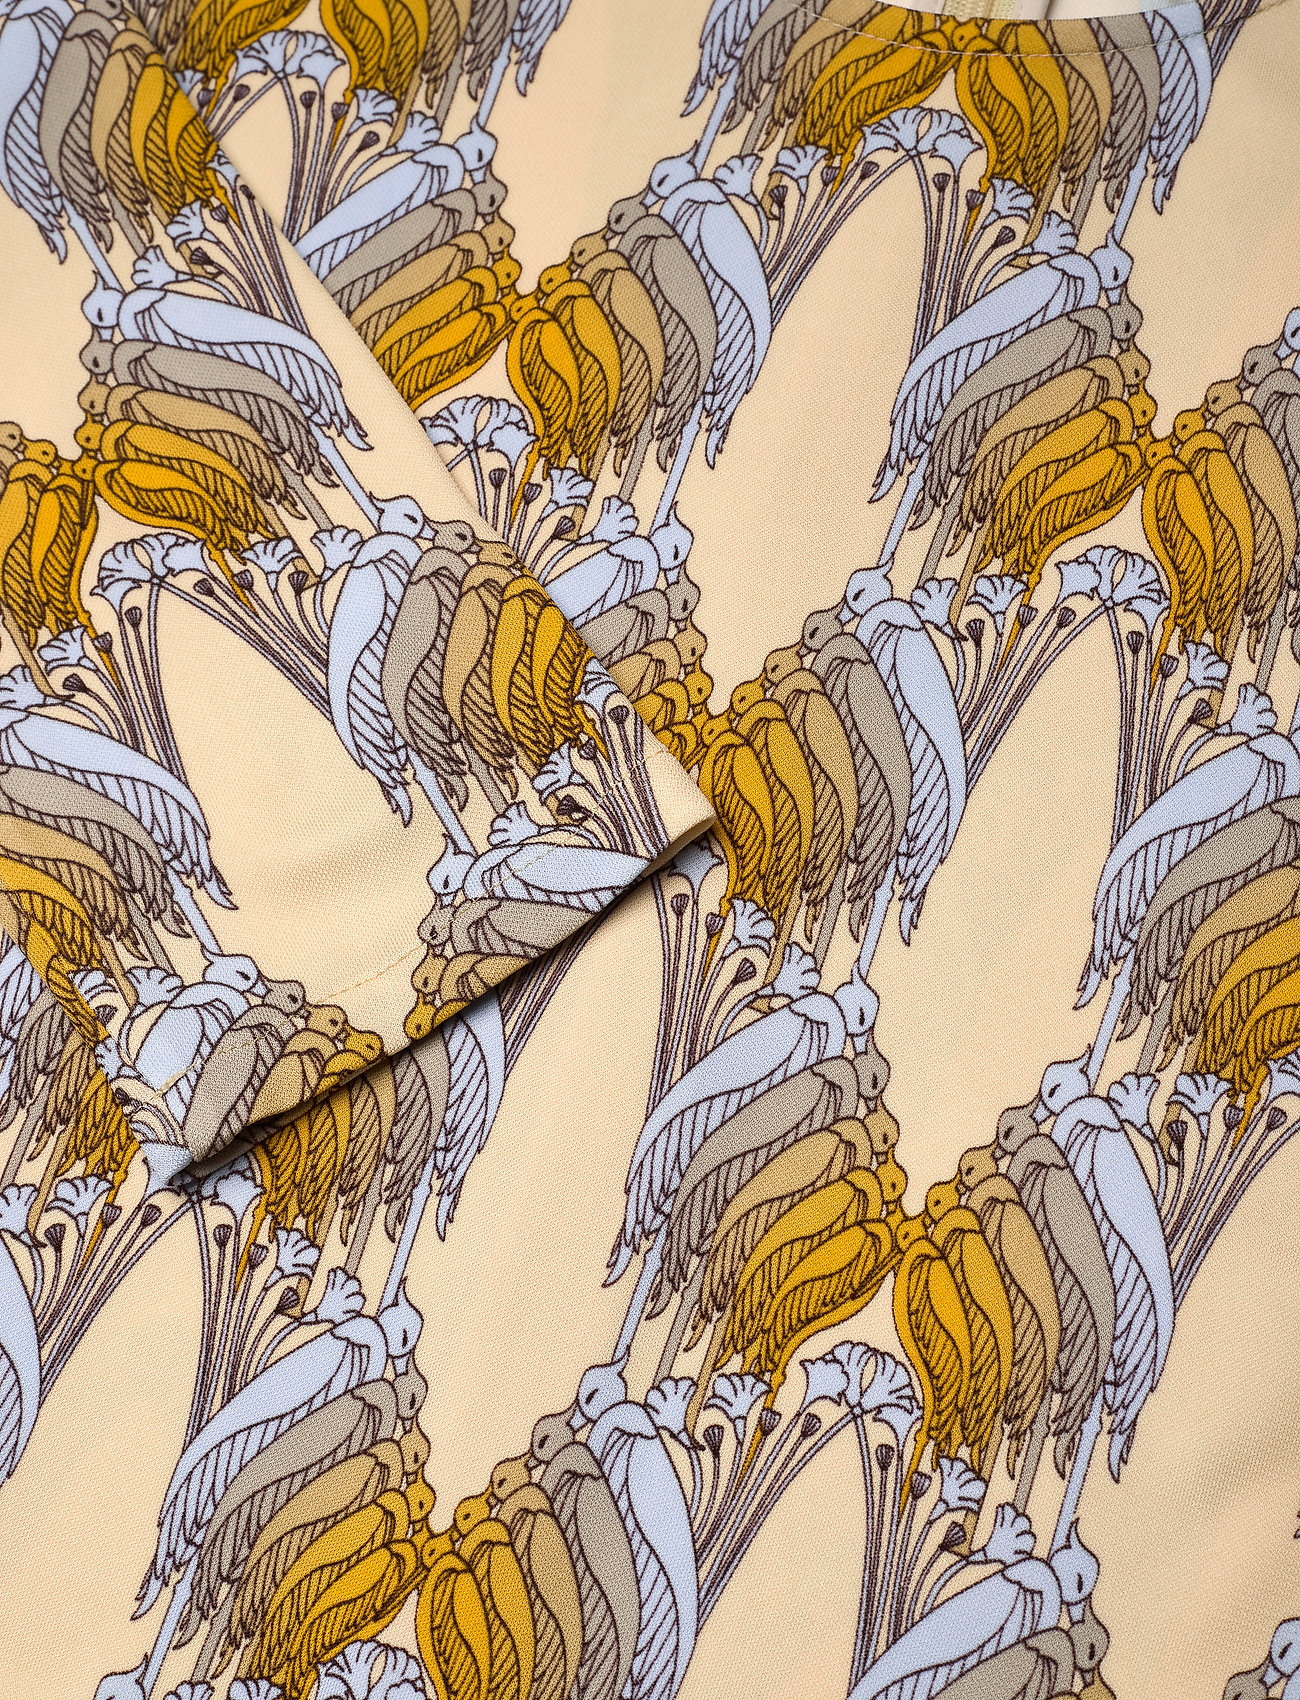 Tory Burch Printed Sheath Dress (Sand Deco Crane Geo),  € | Laaja  valikoima alennustuotteita 